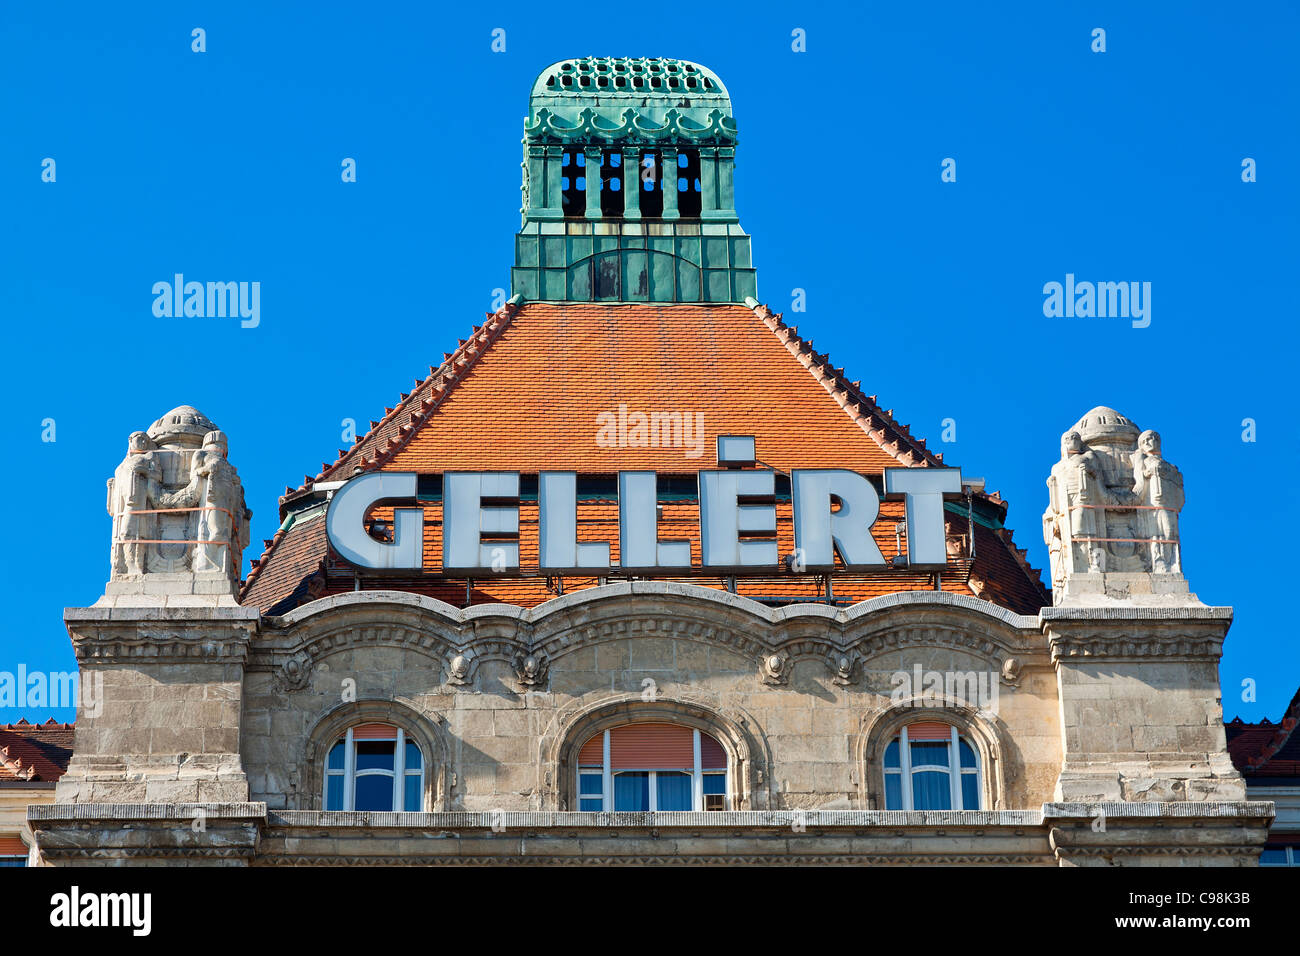 Hotel Gellert Budapest Stockfoto